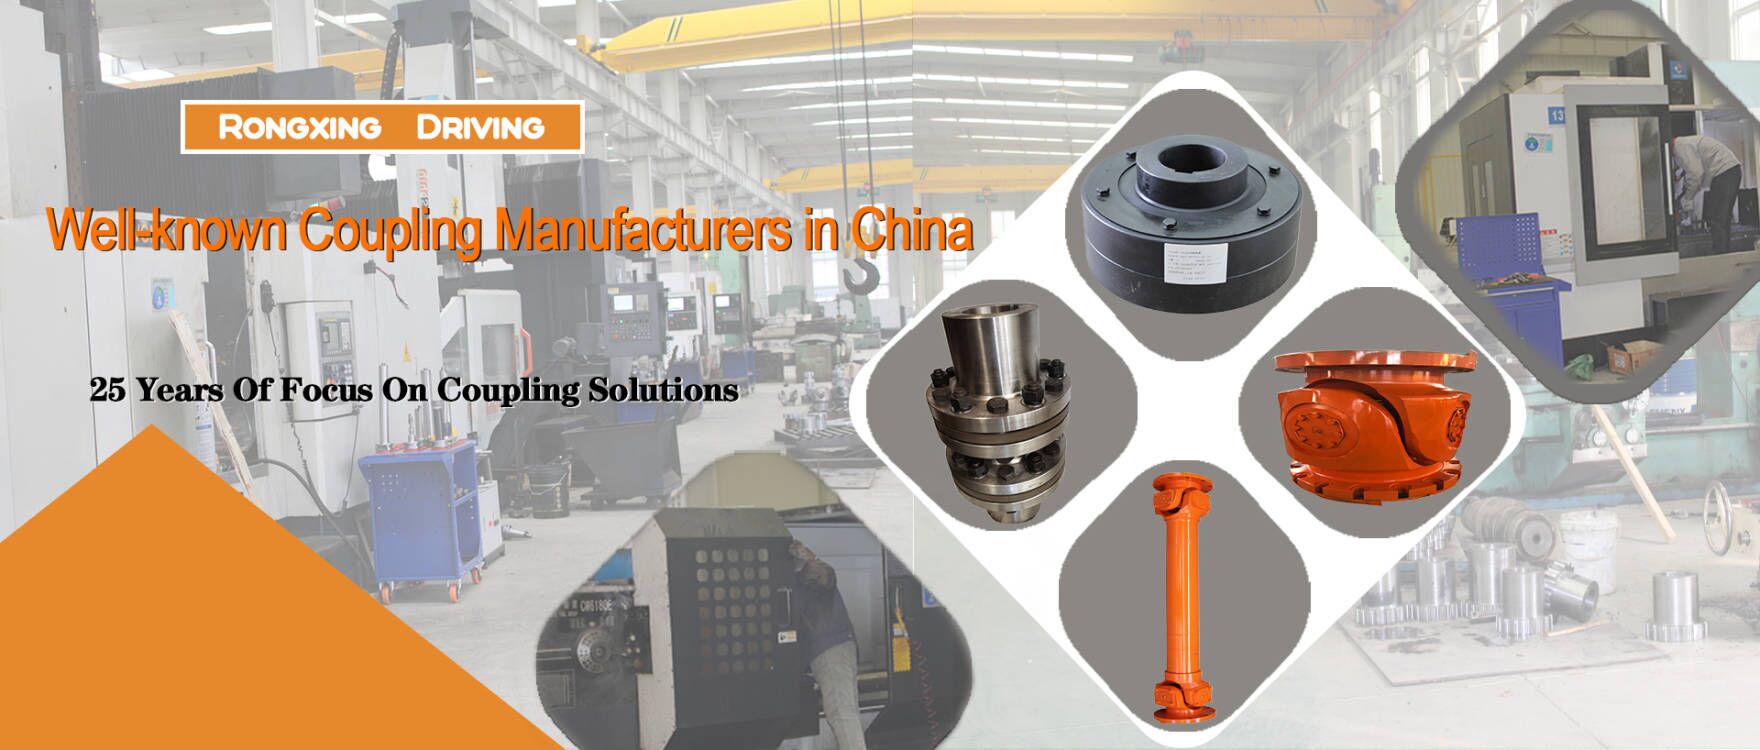 Hebei Rongxing Driving Equipment Technology Co., Ltd. Main Image